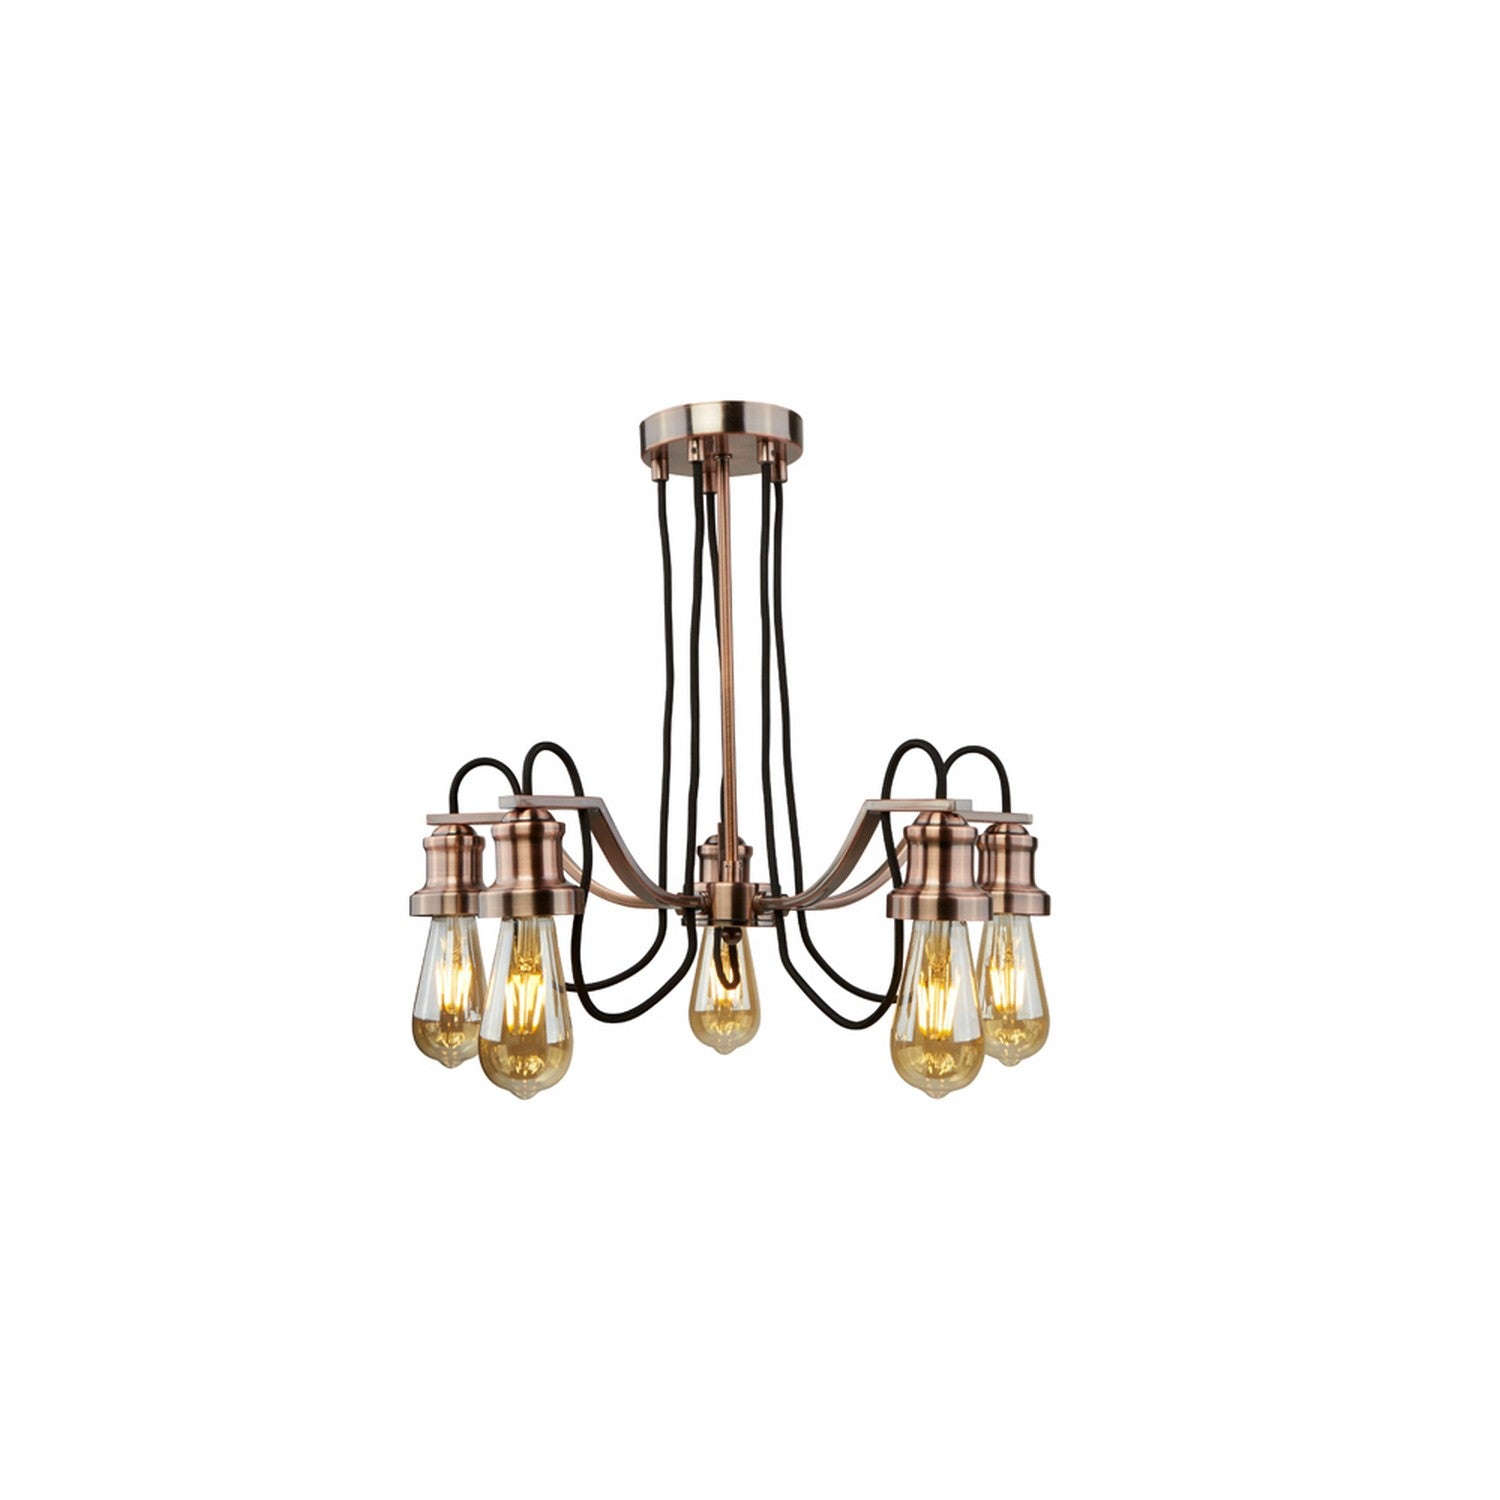 5 Light Ceiling Lamp Antique Copper Finish Modern Chandelier